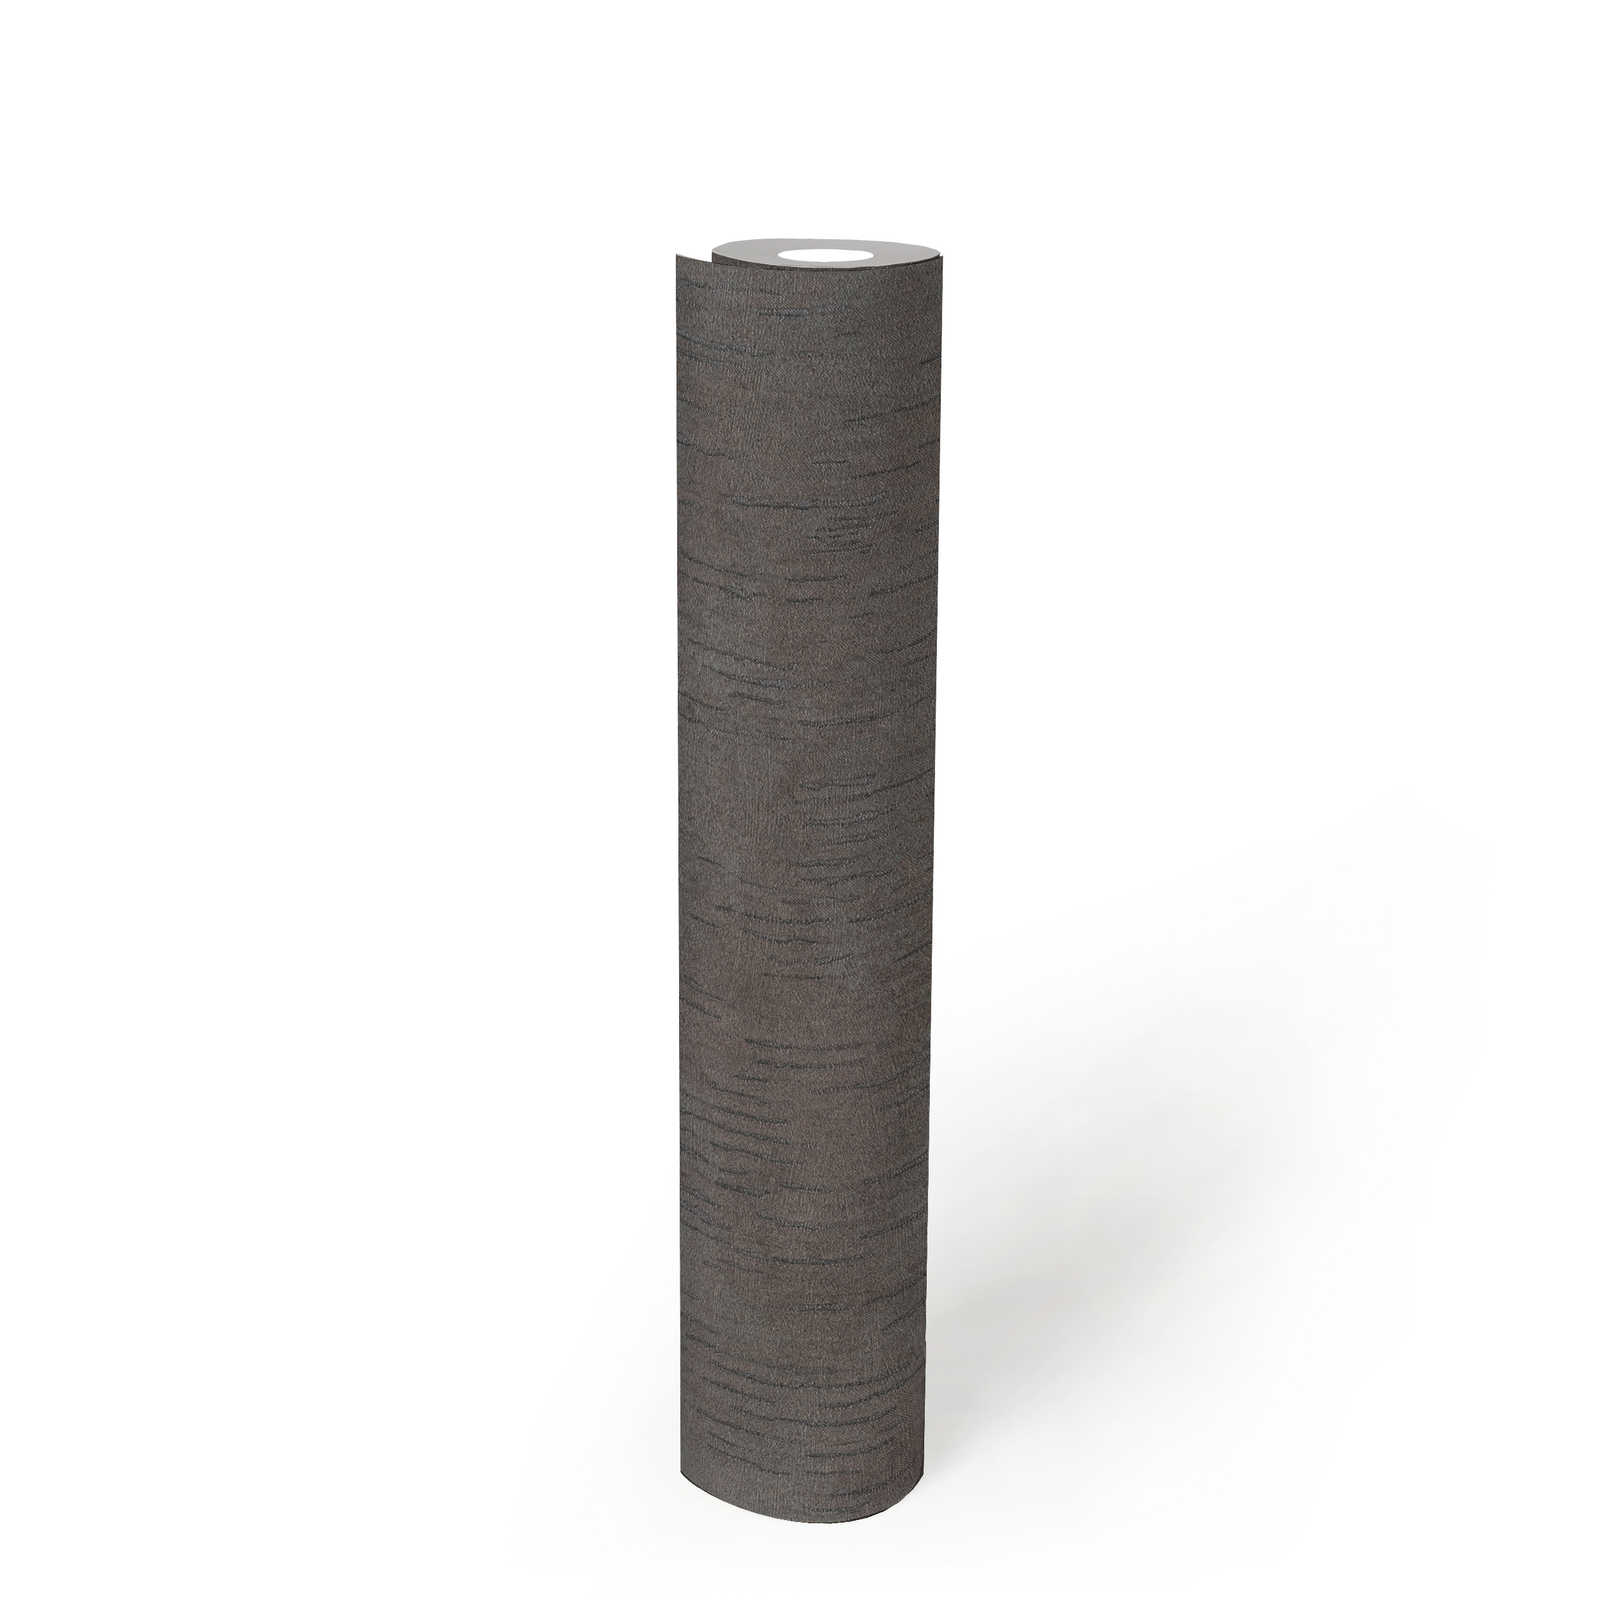             Plain wallpaper anthracite with metallic look - grey, metallic, black
        